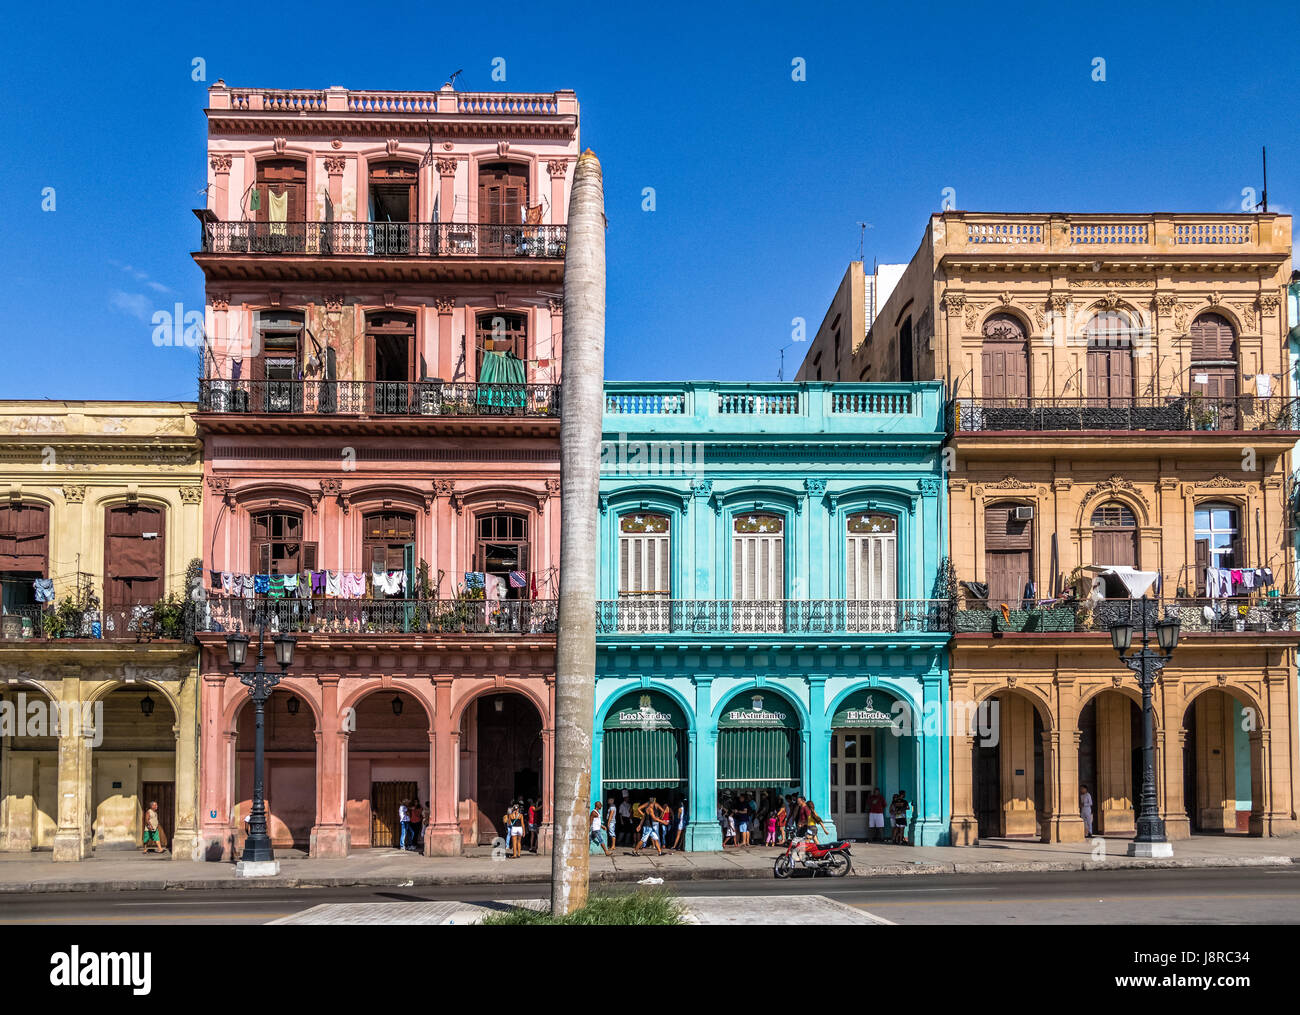 Bunte Gebäude im alten Havanna Zentrum von Street - Havanna, Kuba Stockfoto